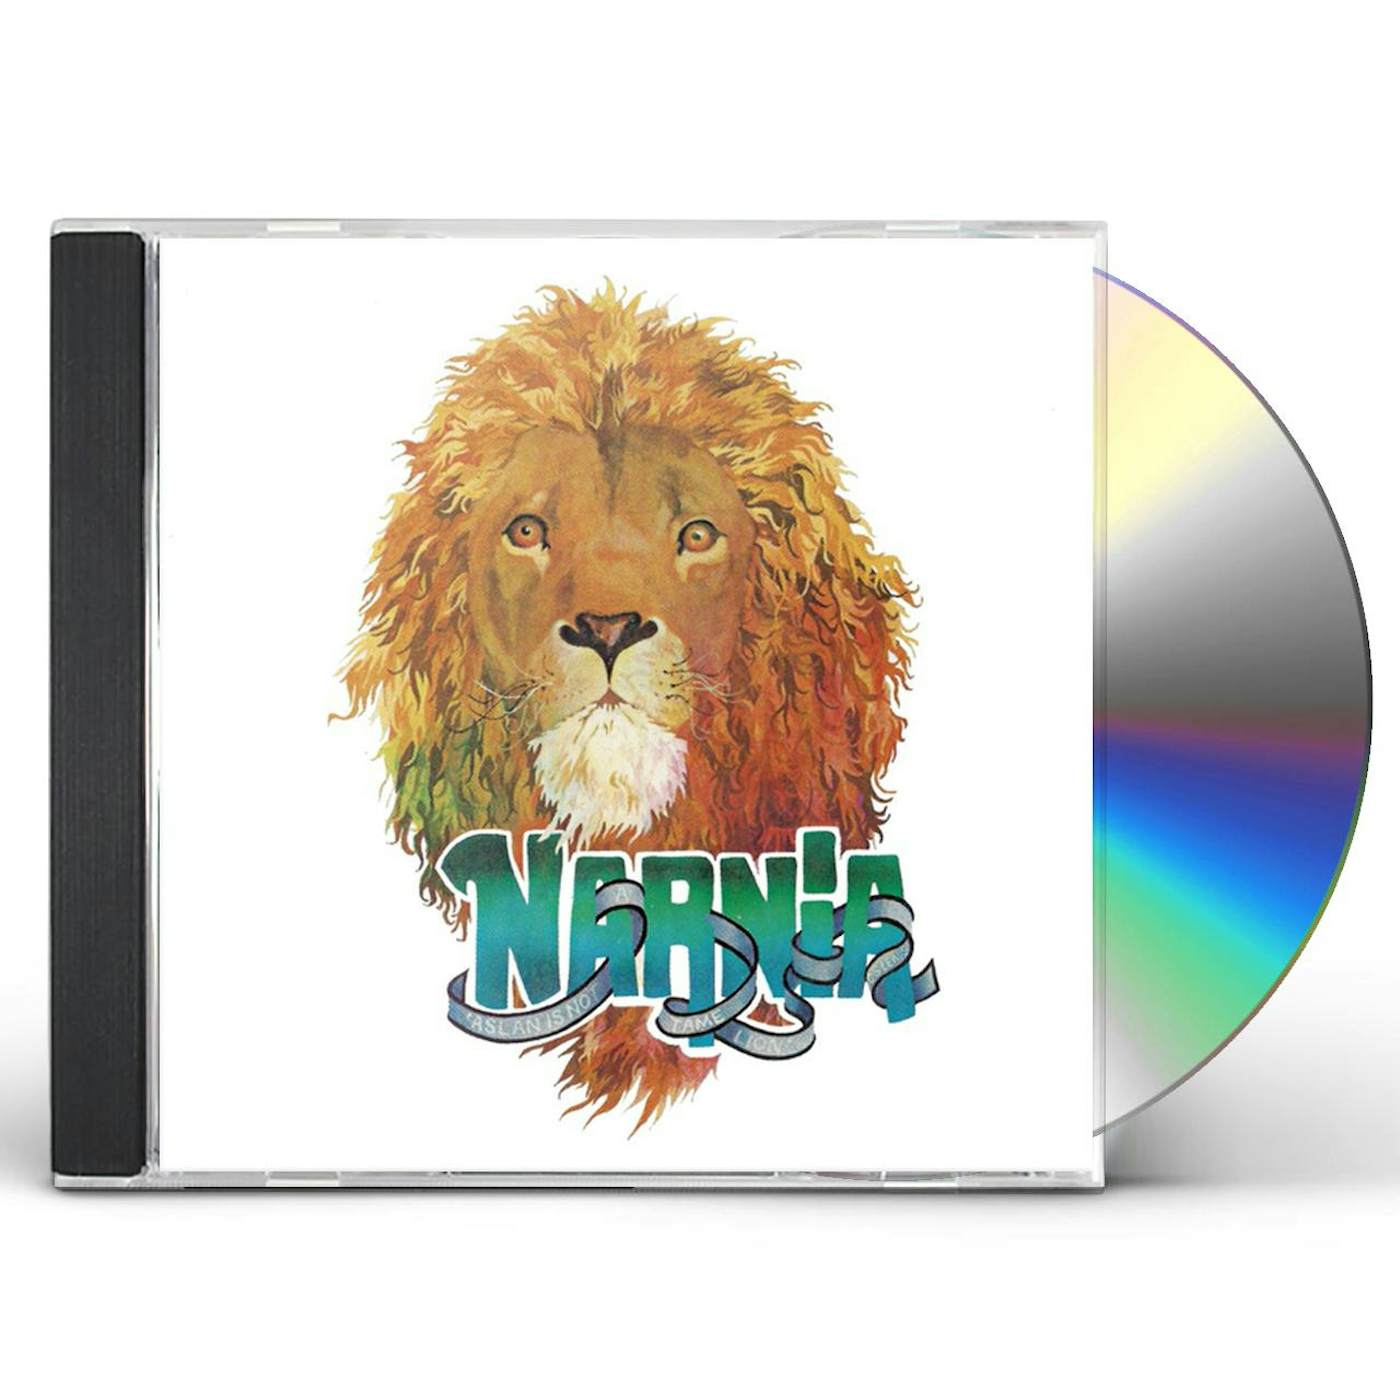 Narnia ASLAN IS NOT A TAME LION CD